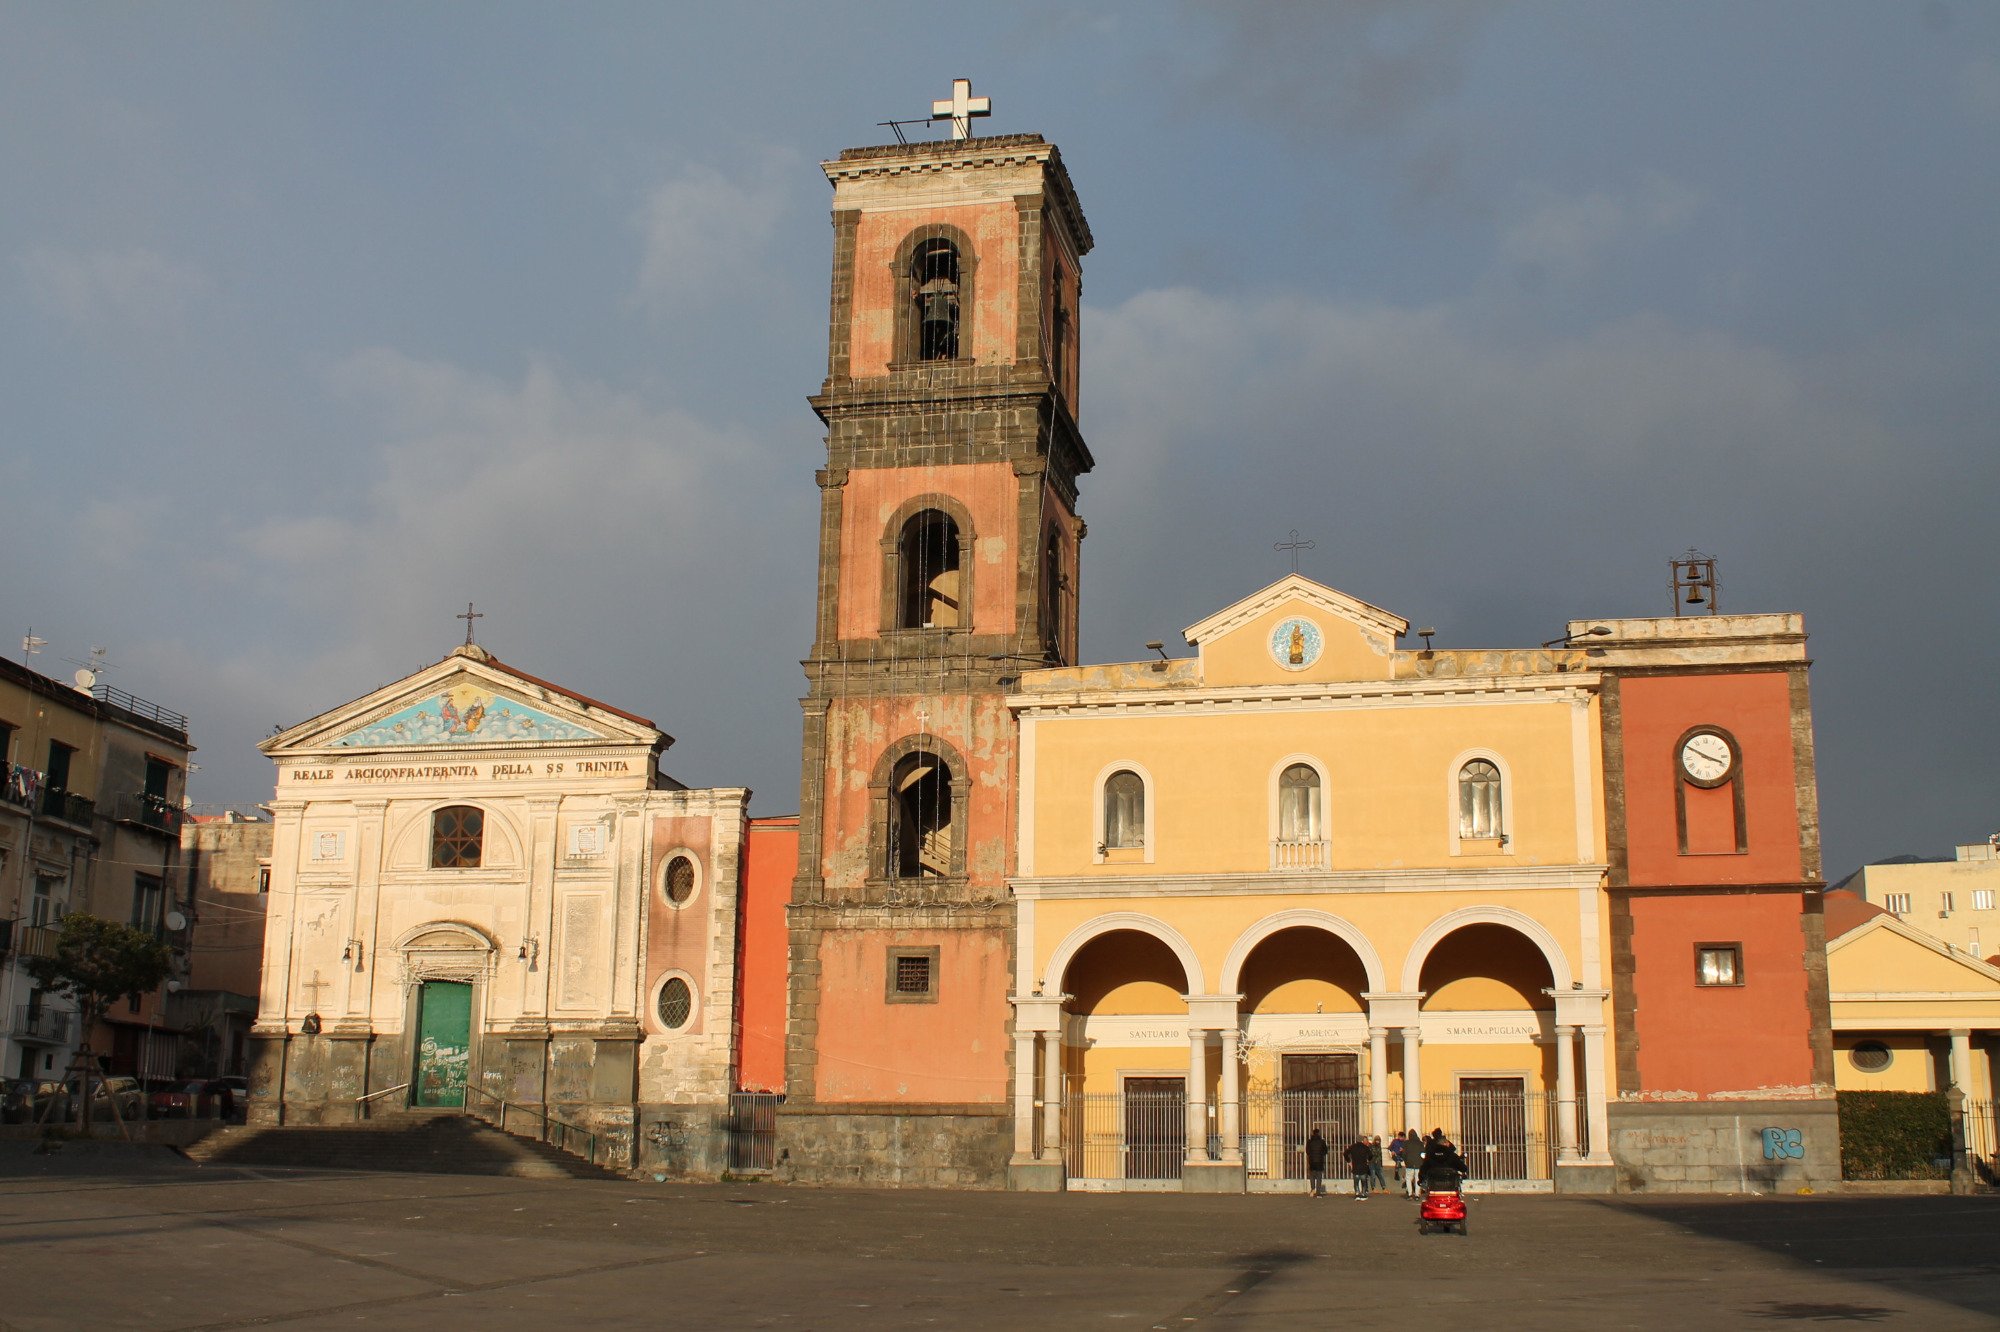 Basilica di Santa Maria a Pugliano